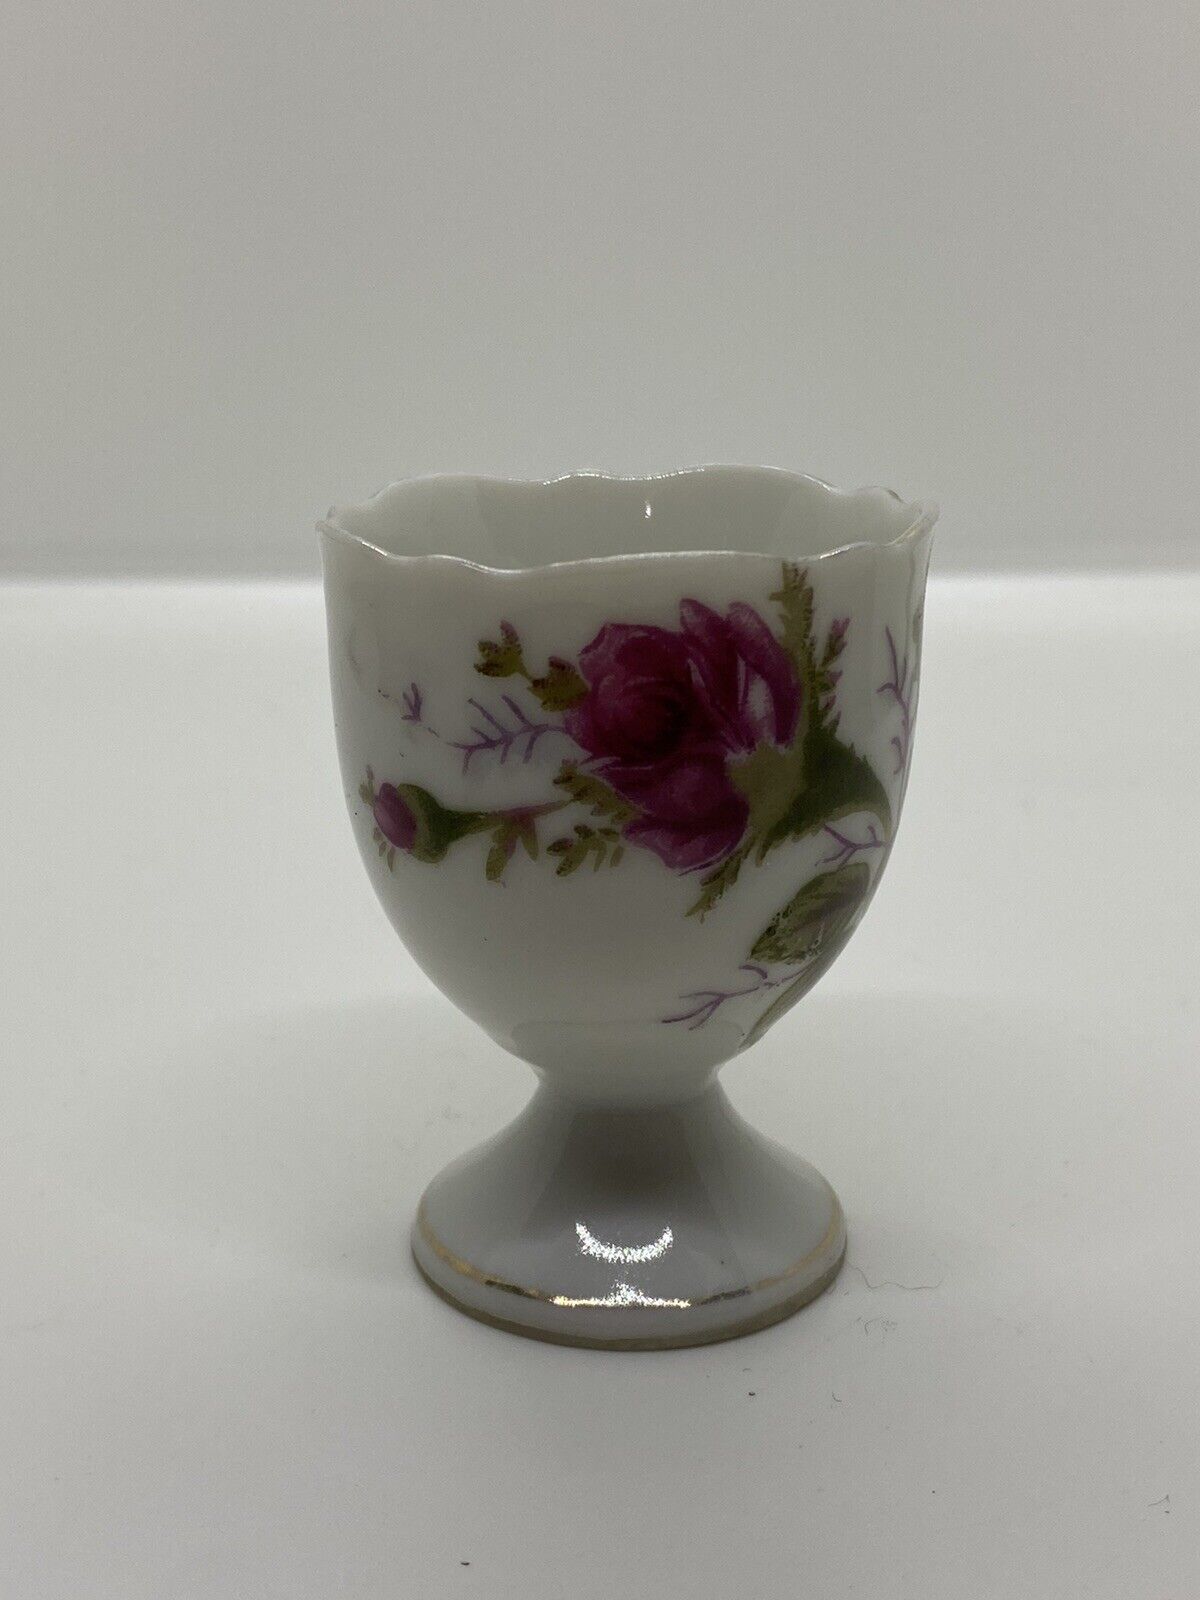 Vintage White Porcelain Egg Cup with Floral Design Made in Japan